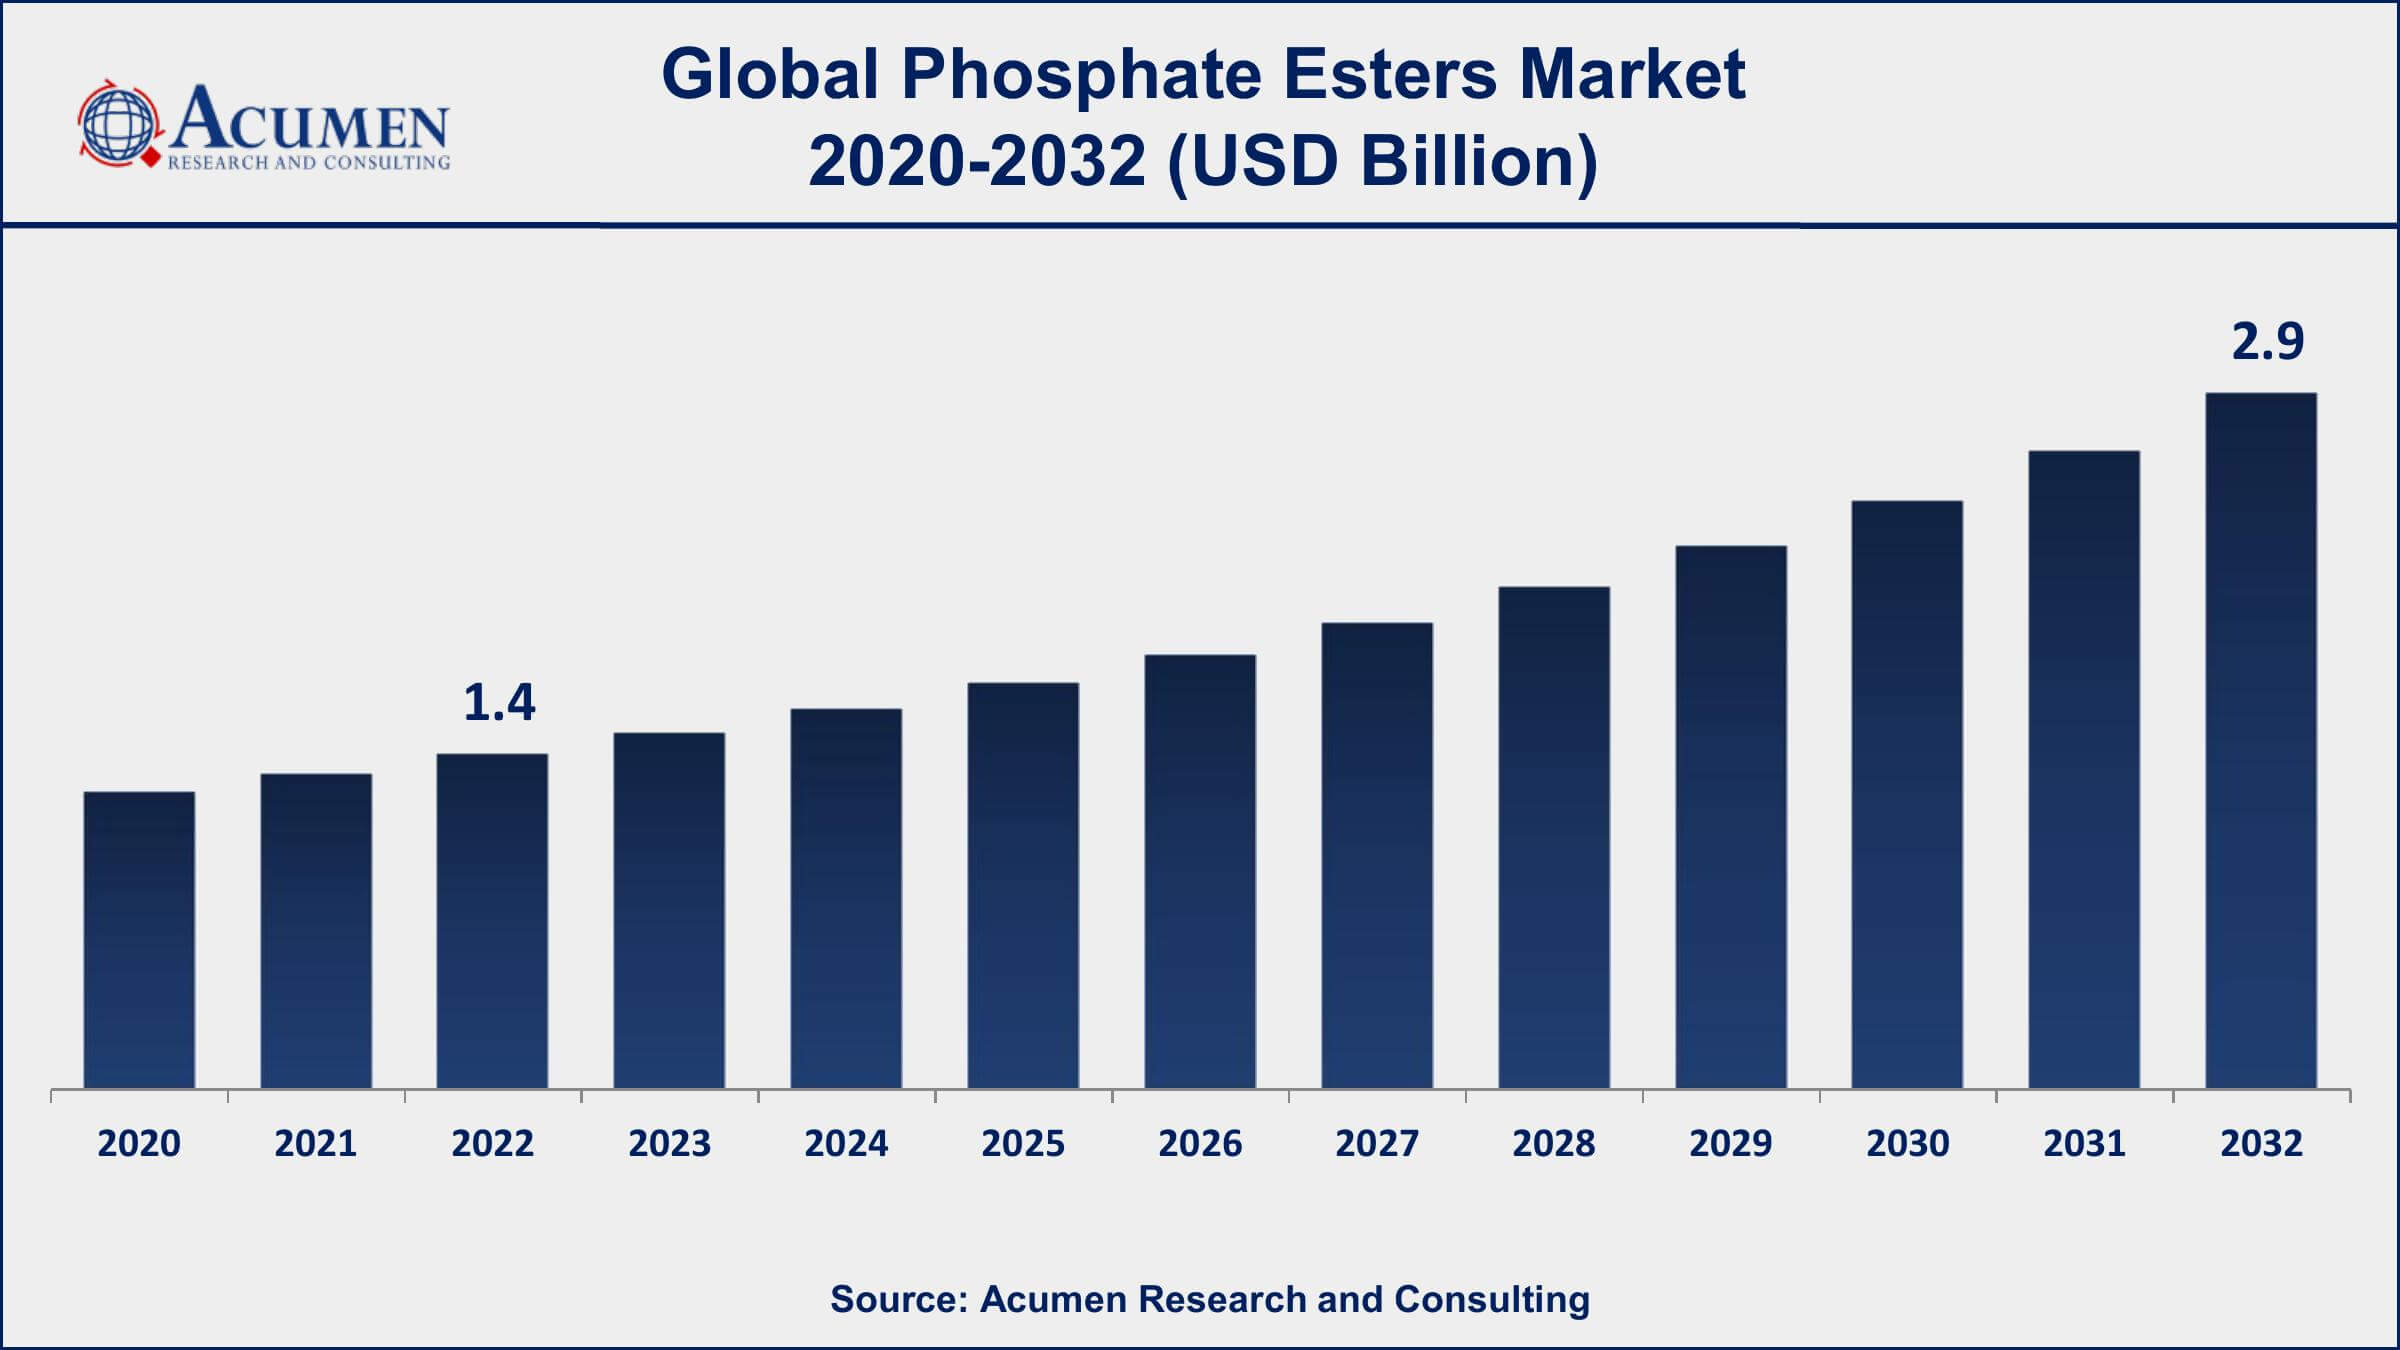 Phosphate Esters Market Analysis Period